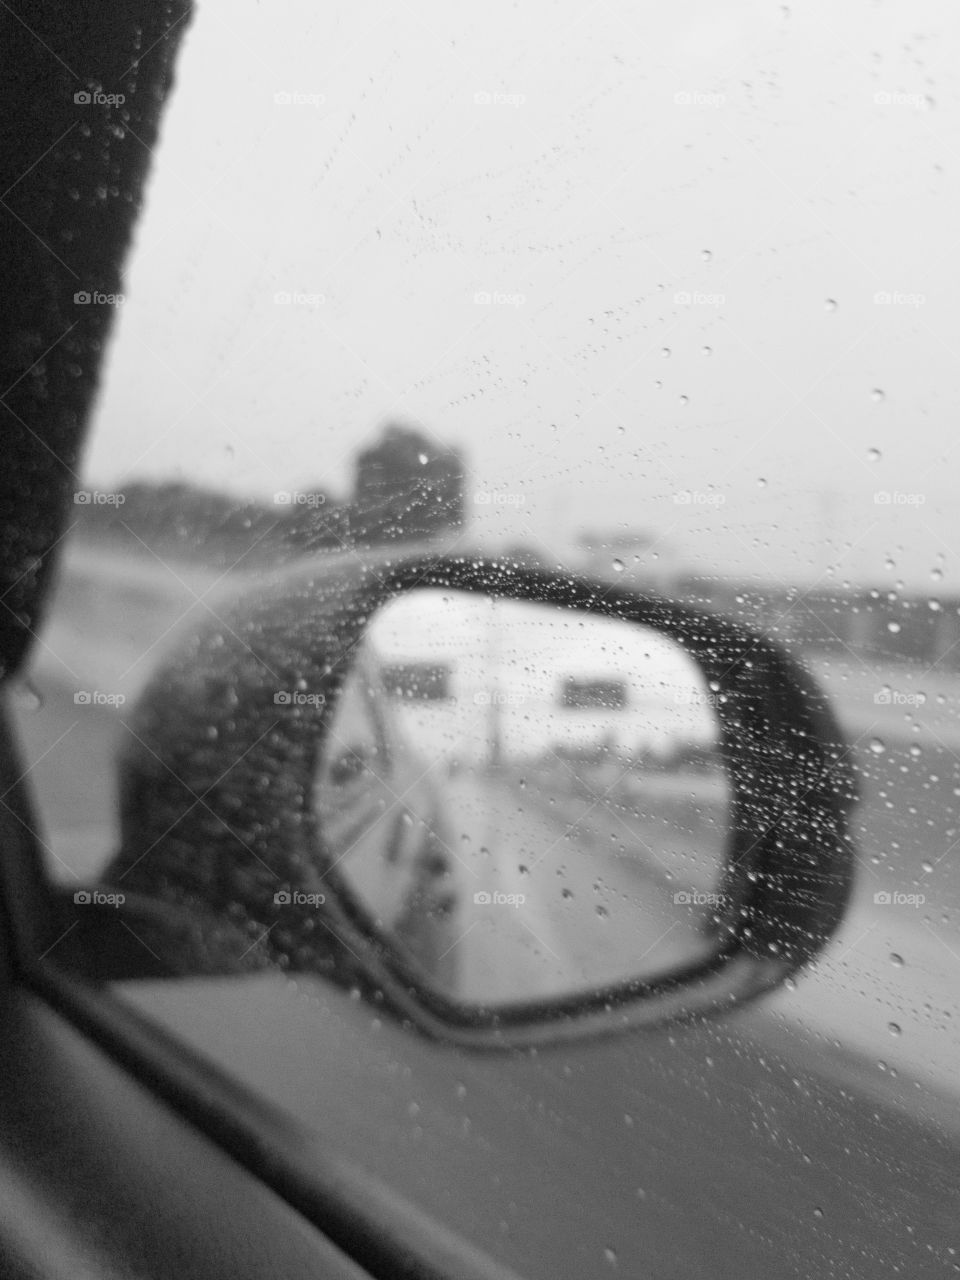 Rainfall on the windshield